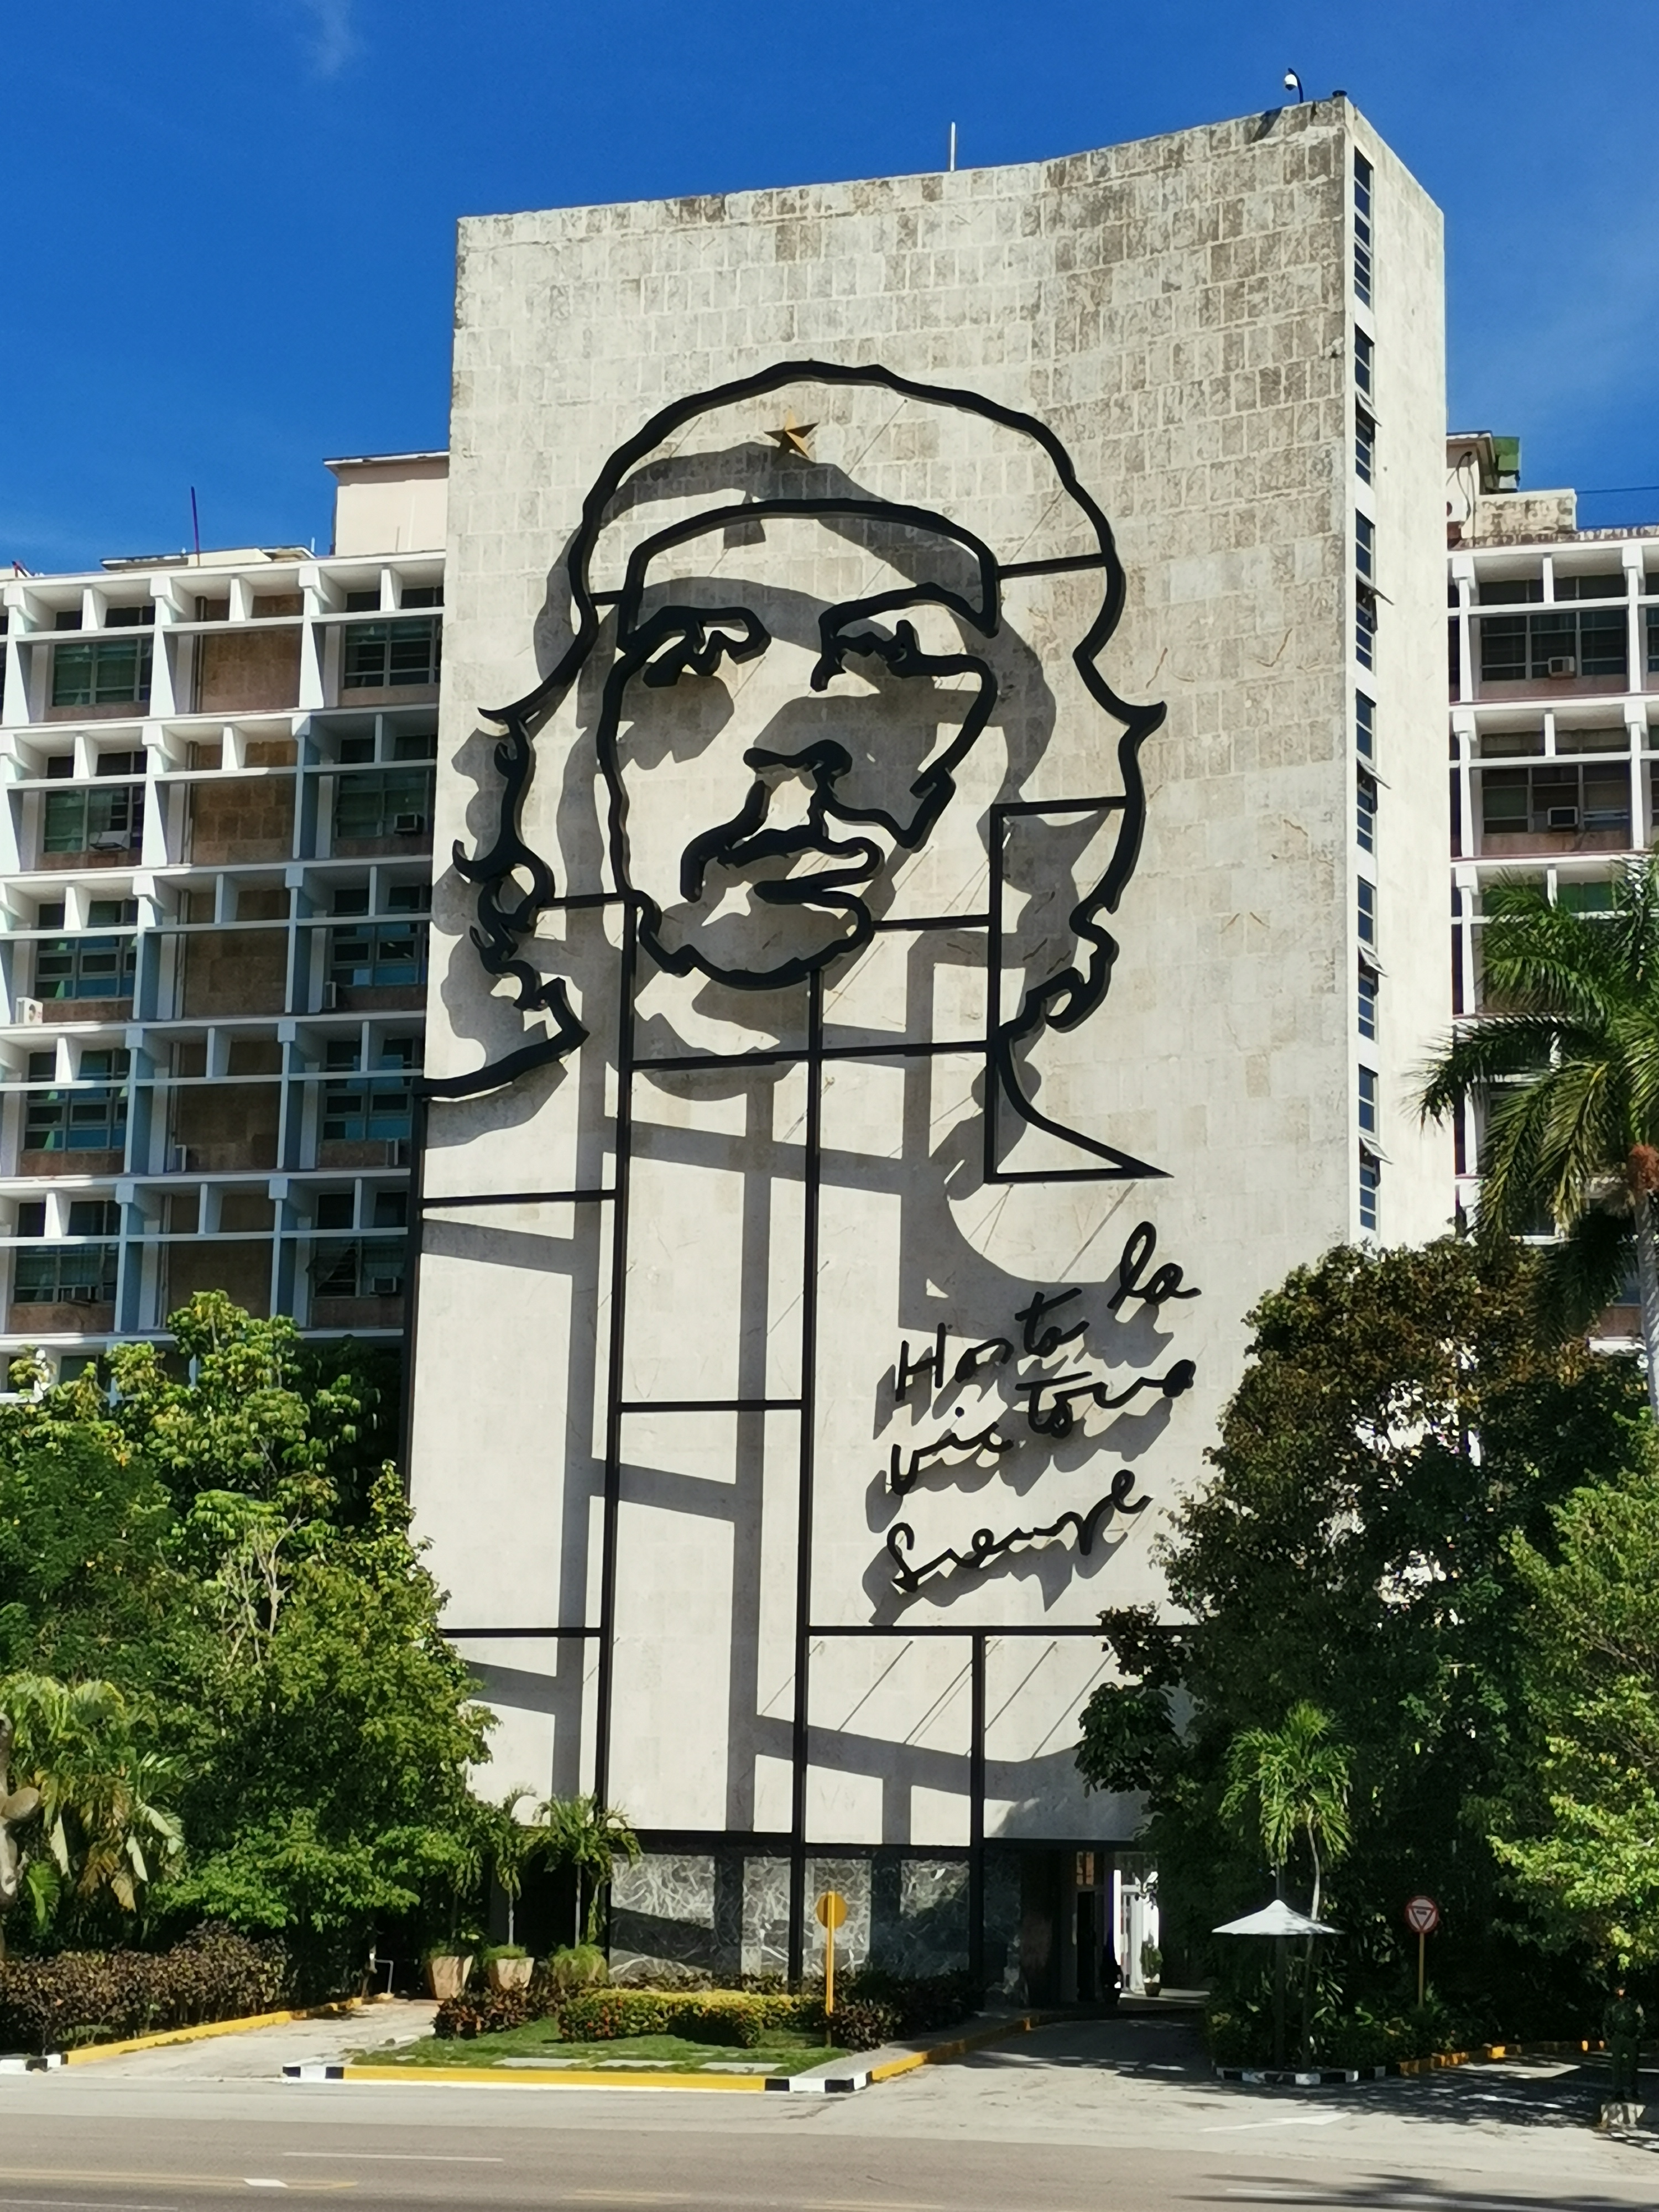 City Havana